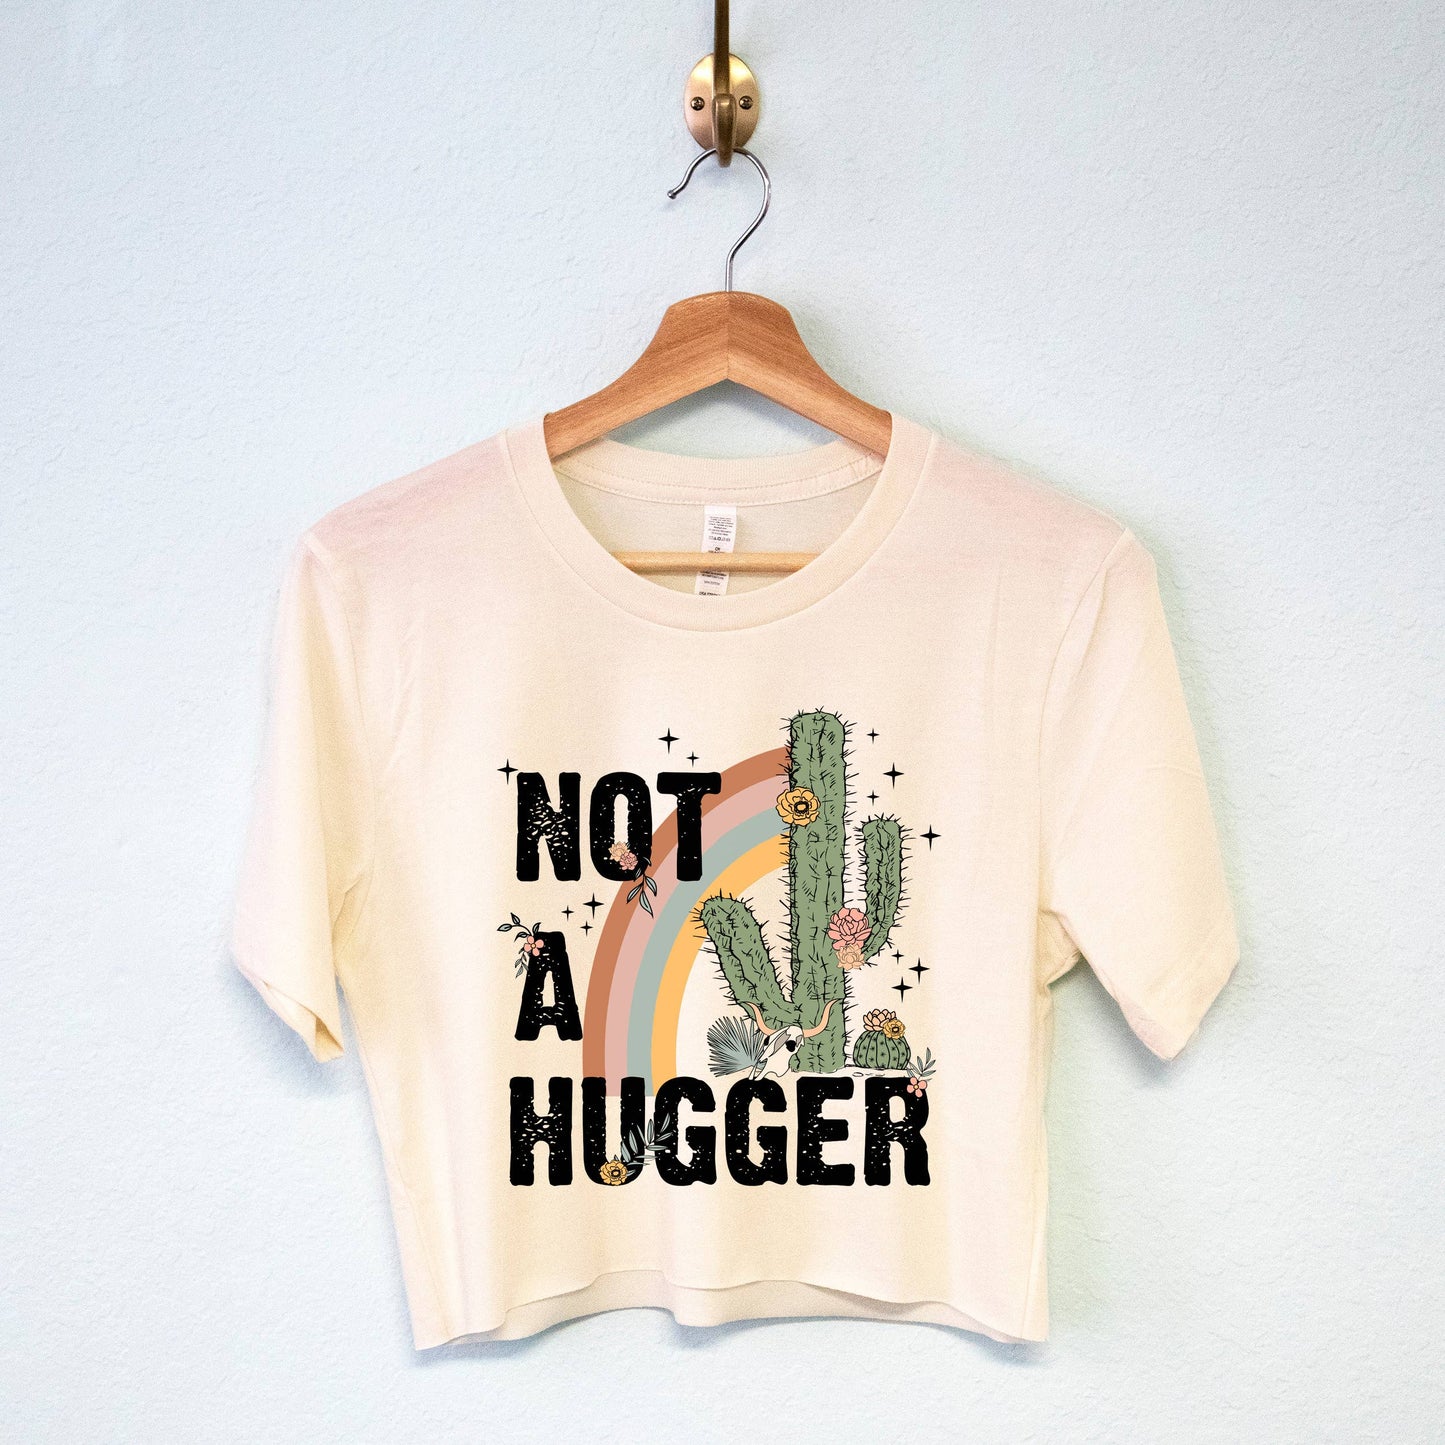 Nobullwoman Apparel - Not a Hugger Cactus Crop Top Shirt for Women